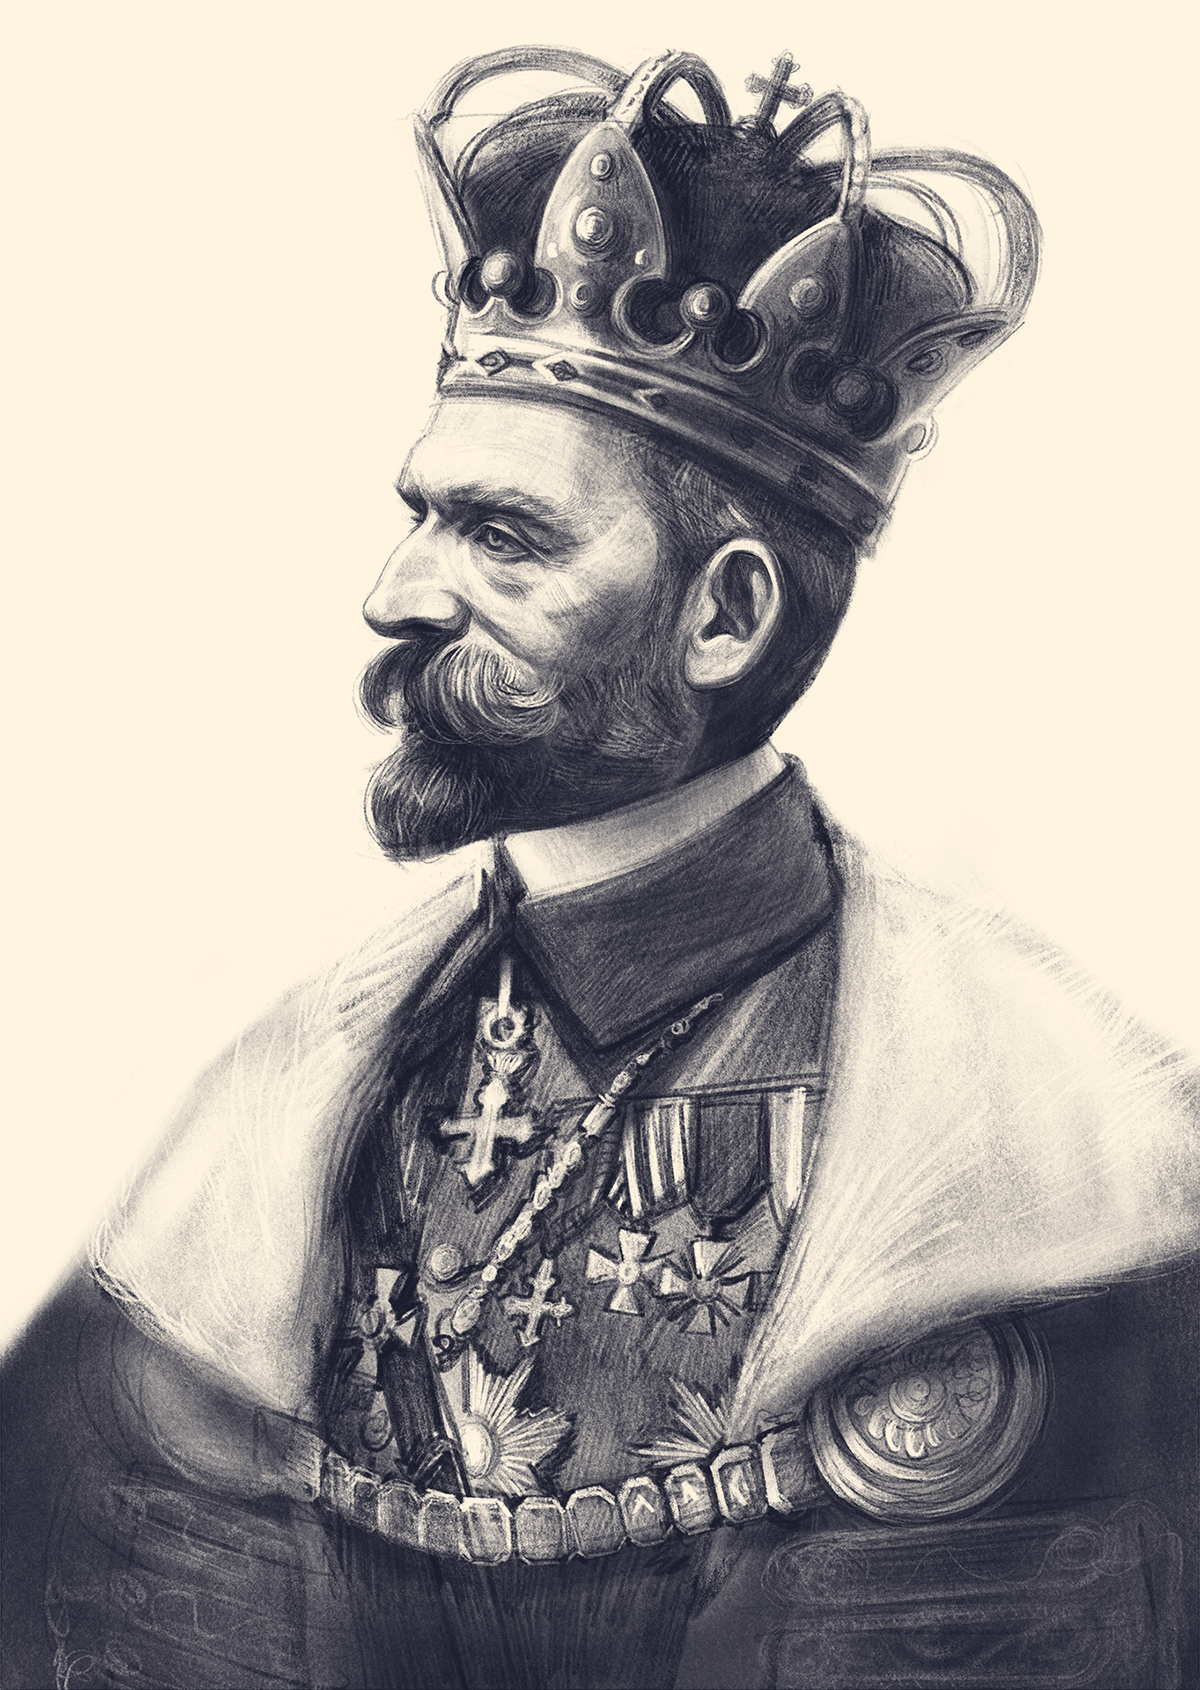 Digital pencil portrait of King Ferdinand I of Romania